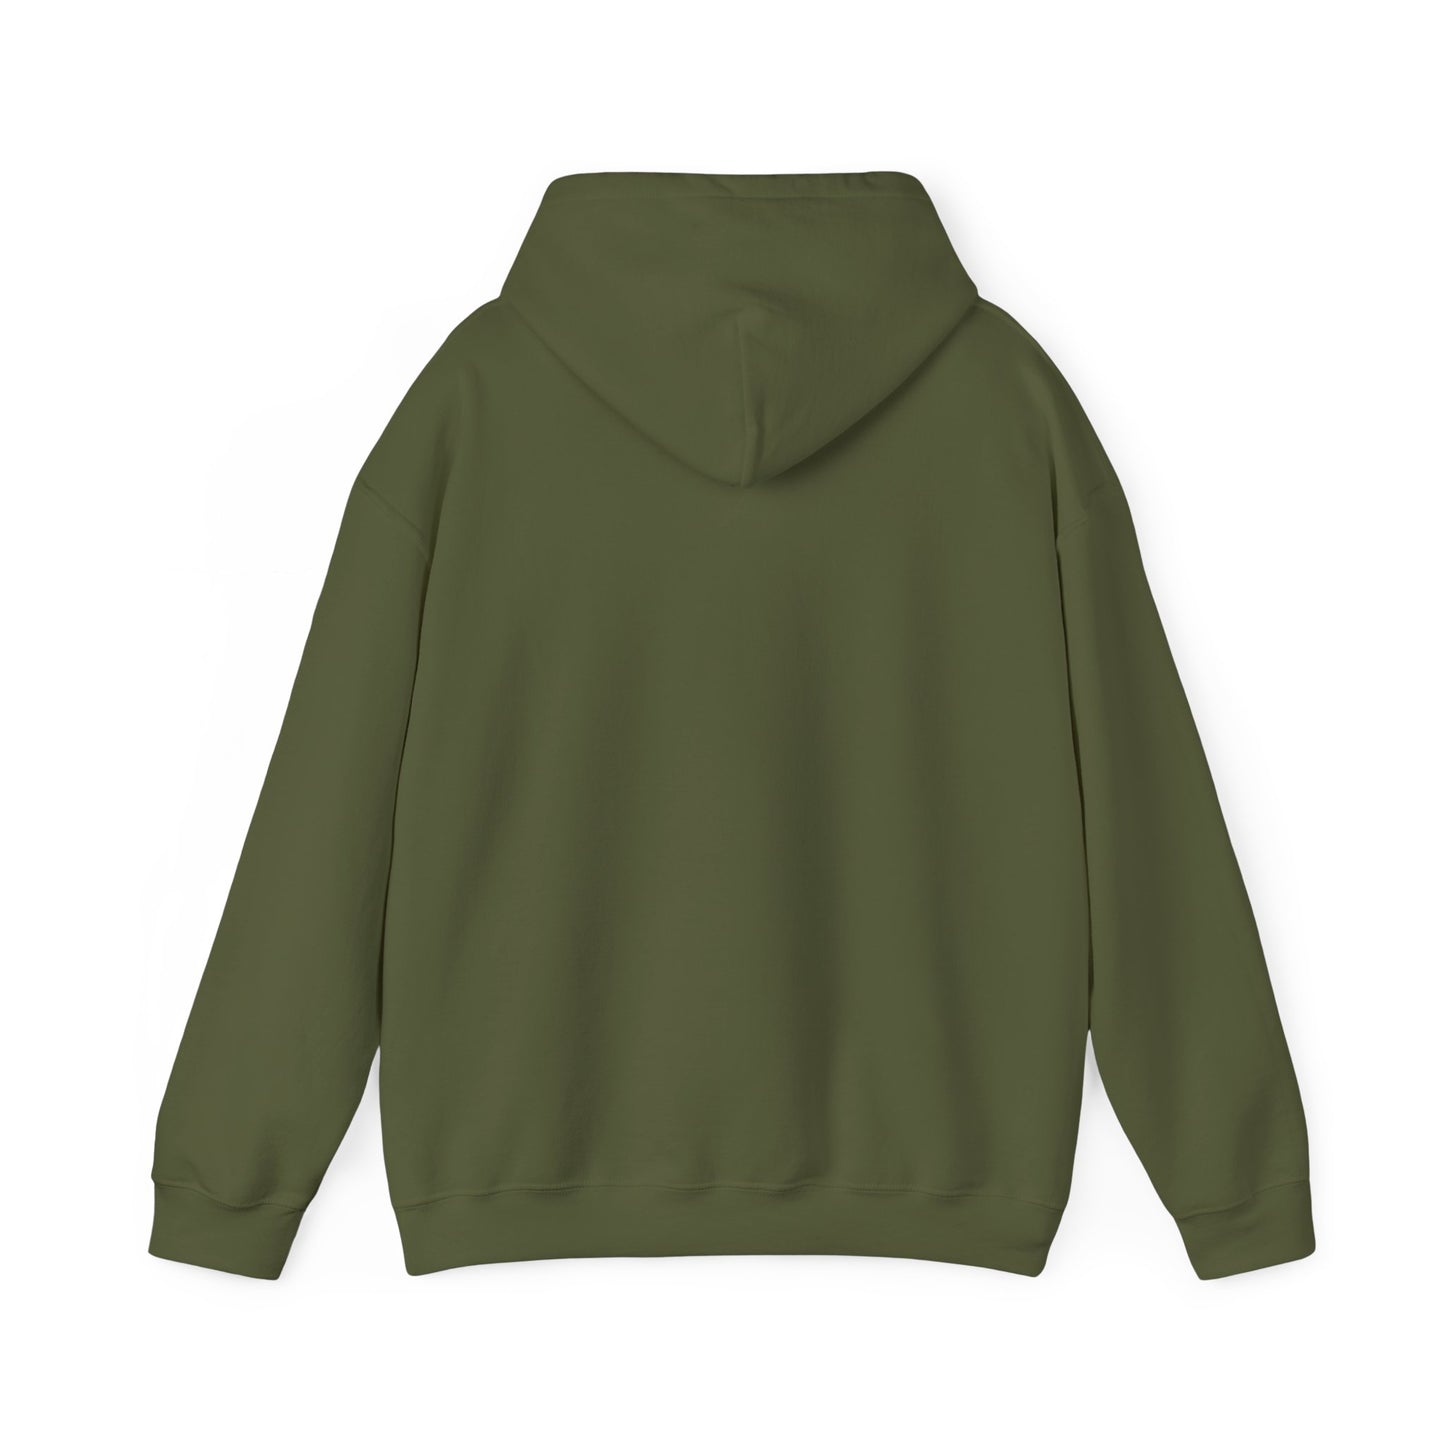 360 Military green Academy  Hooded Sweatshirt